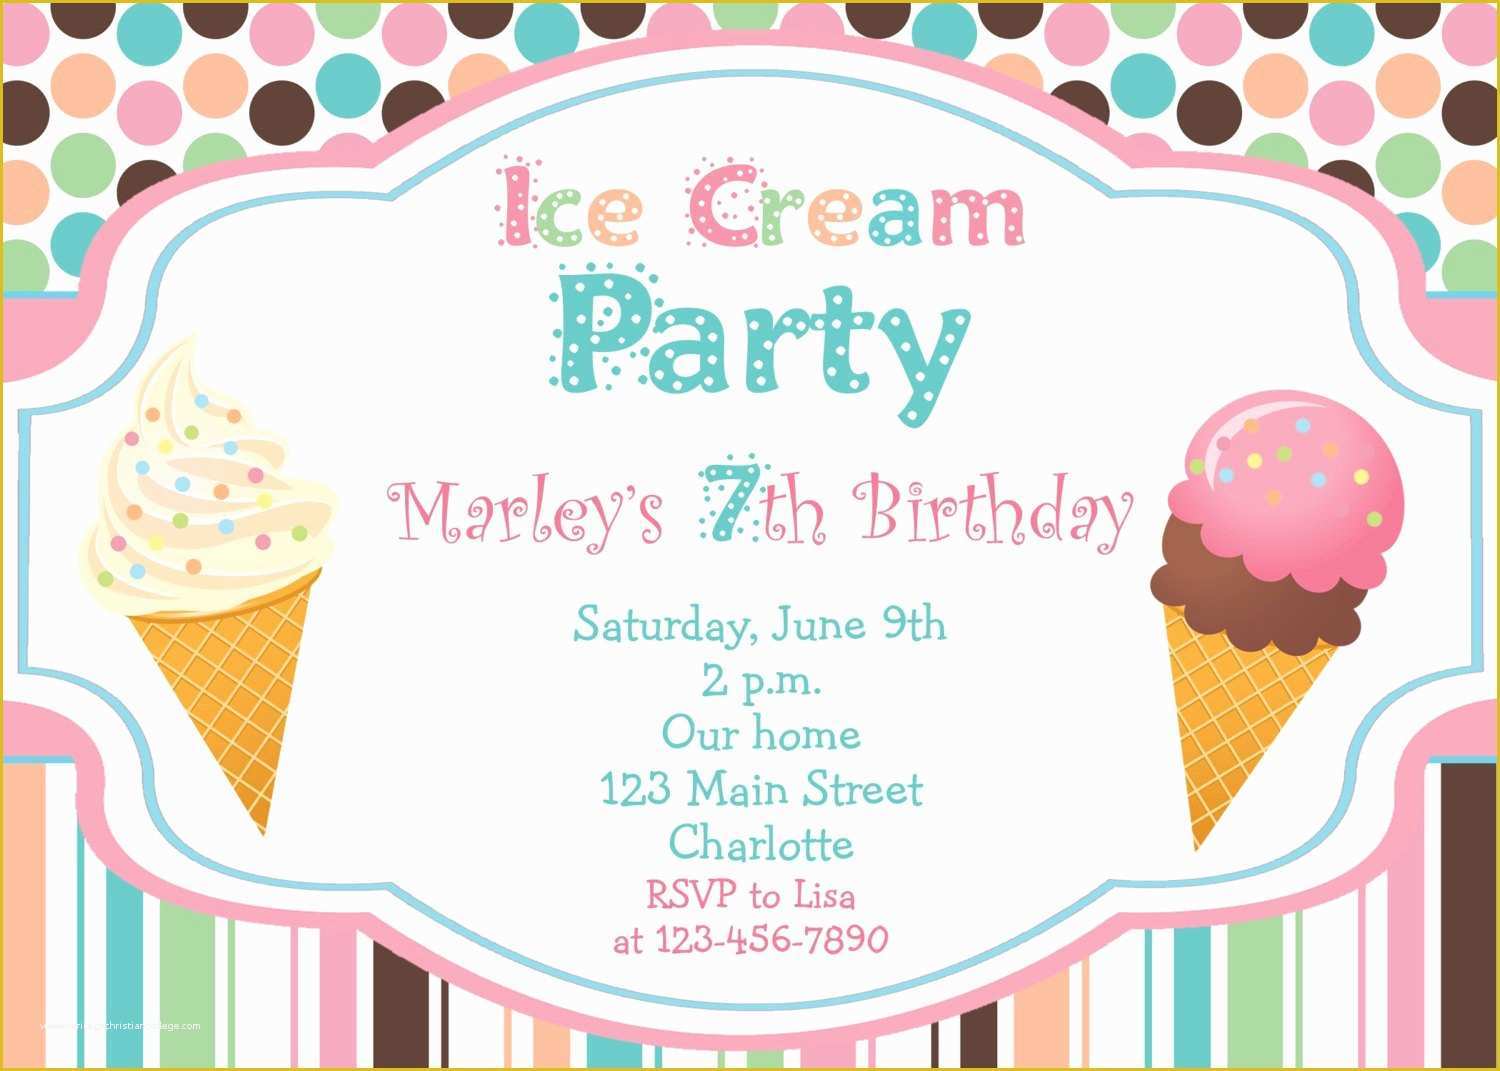 Ice Cream Birthday Invitation Template Free Of Ice Cream Party Birthday Invitation Ice by thebutterflypress